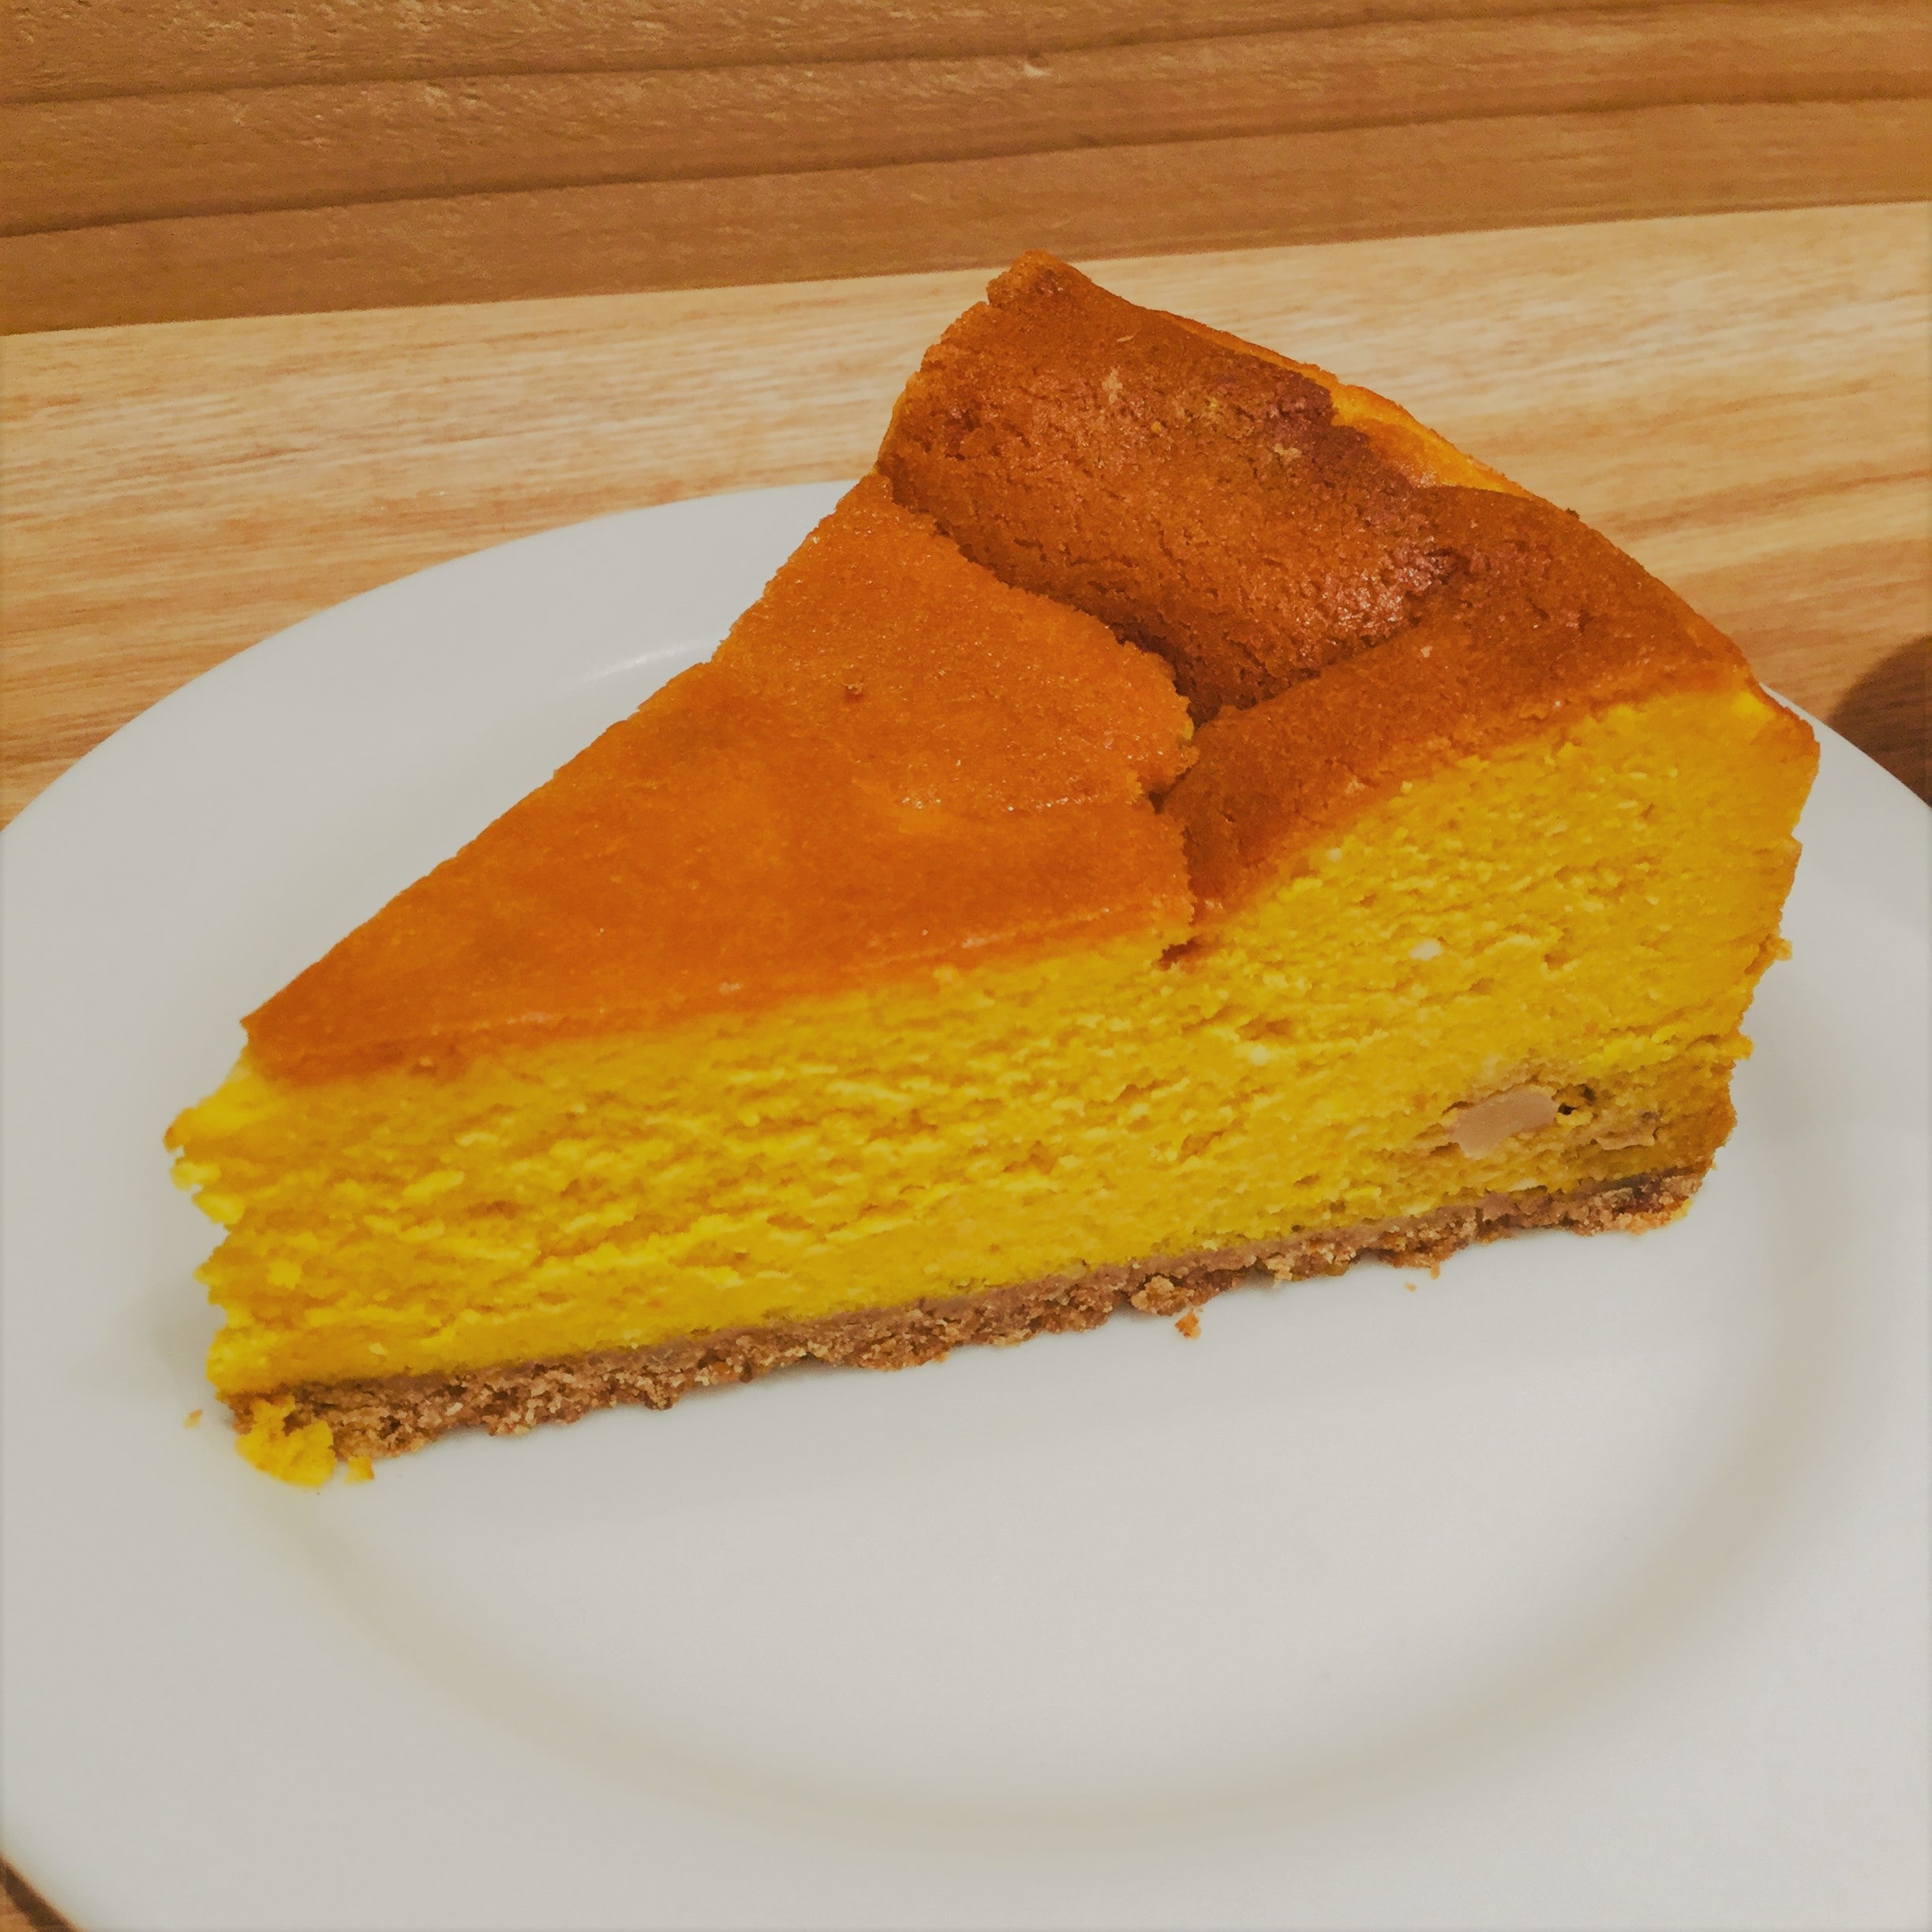 Cafe Meal 上野マルイ 今年もやります 上野店限定メニュー かぼちゃのチーズケーキ 無印良品